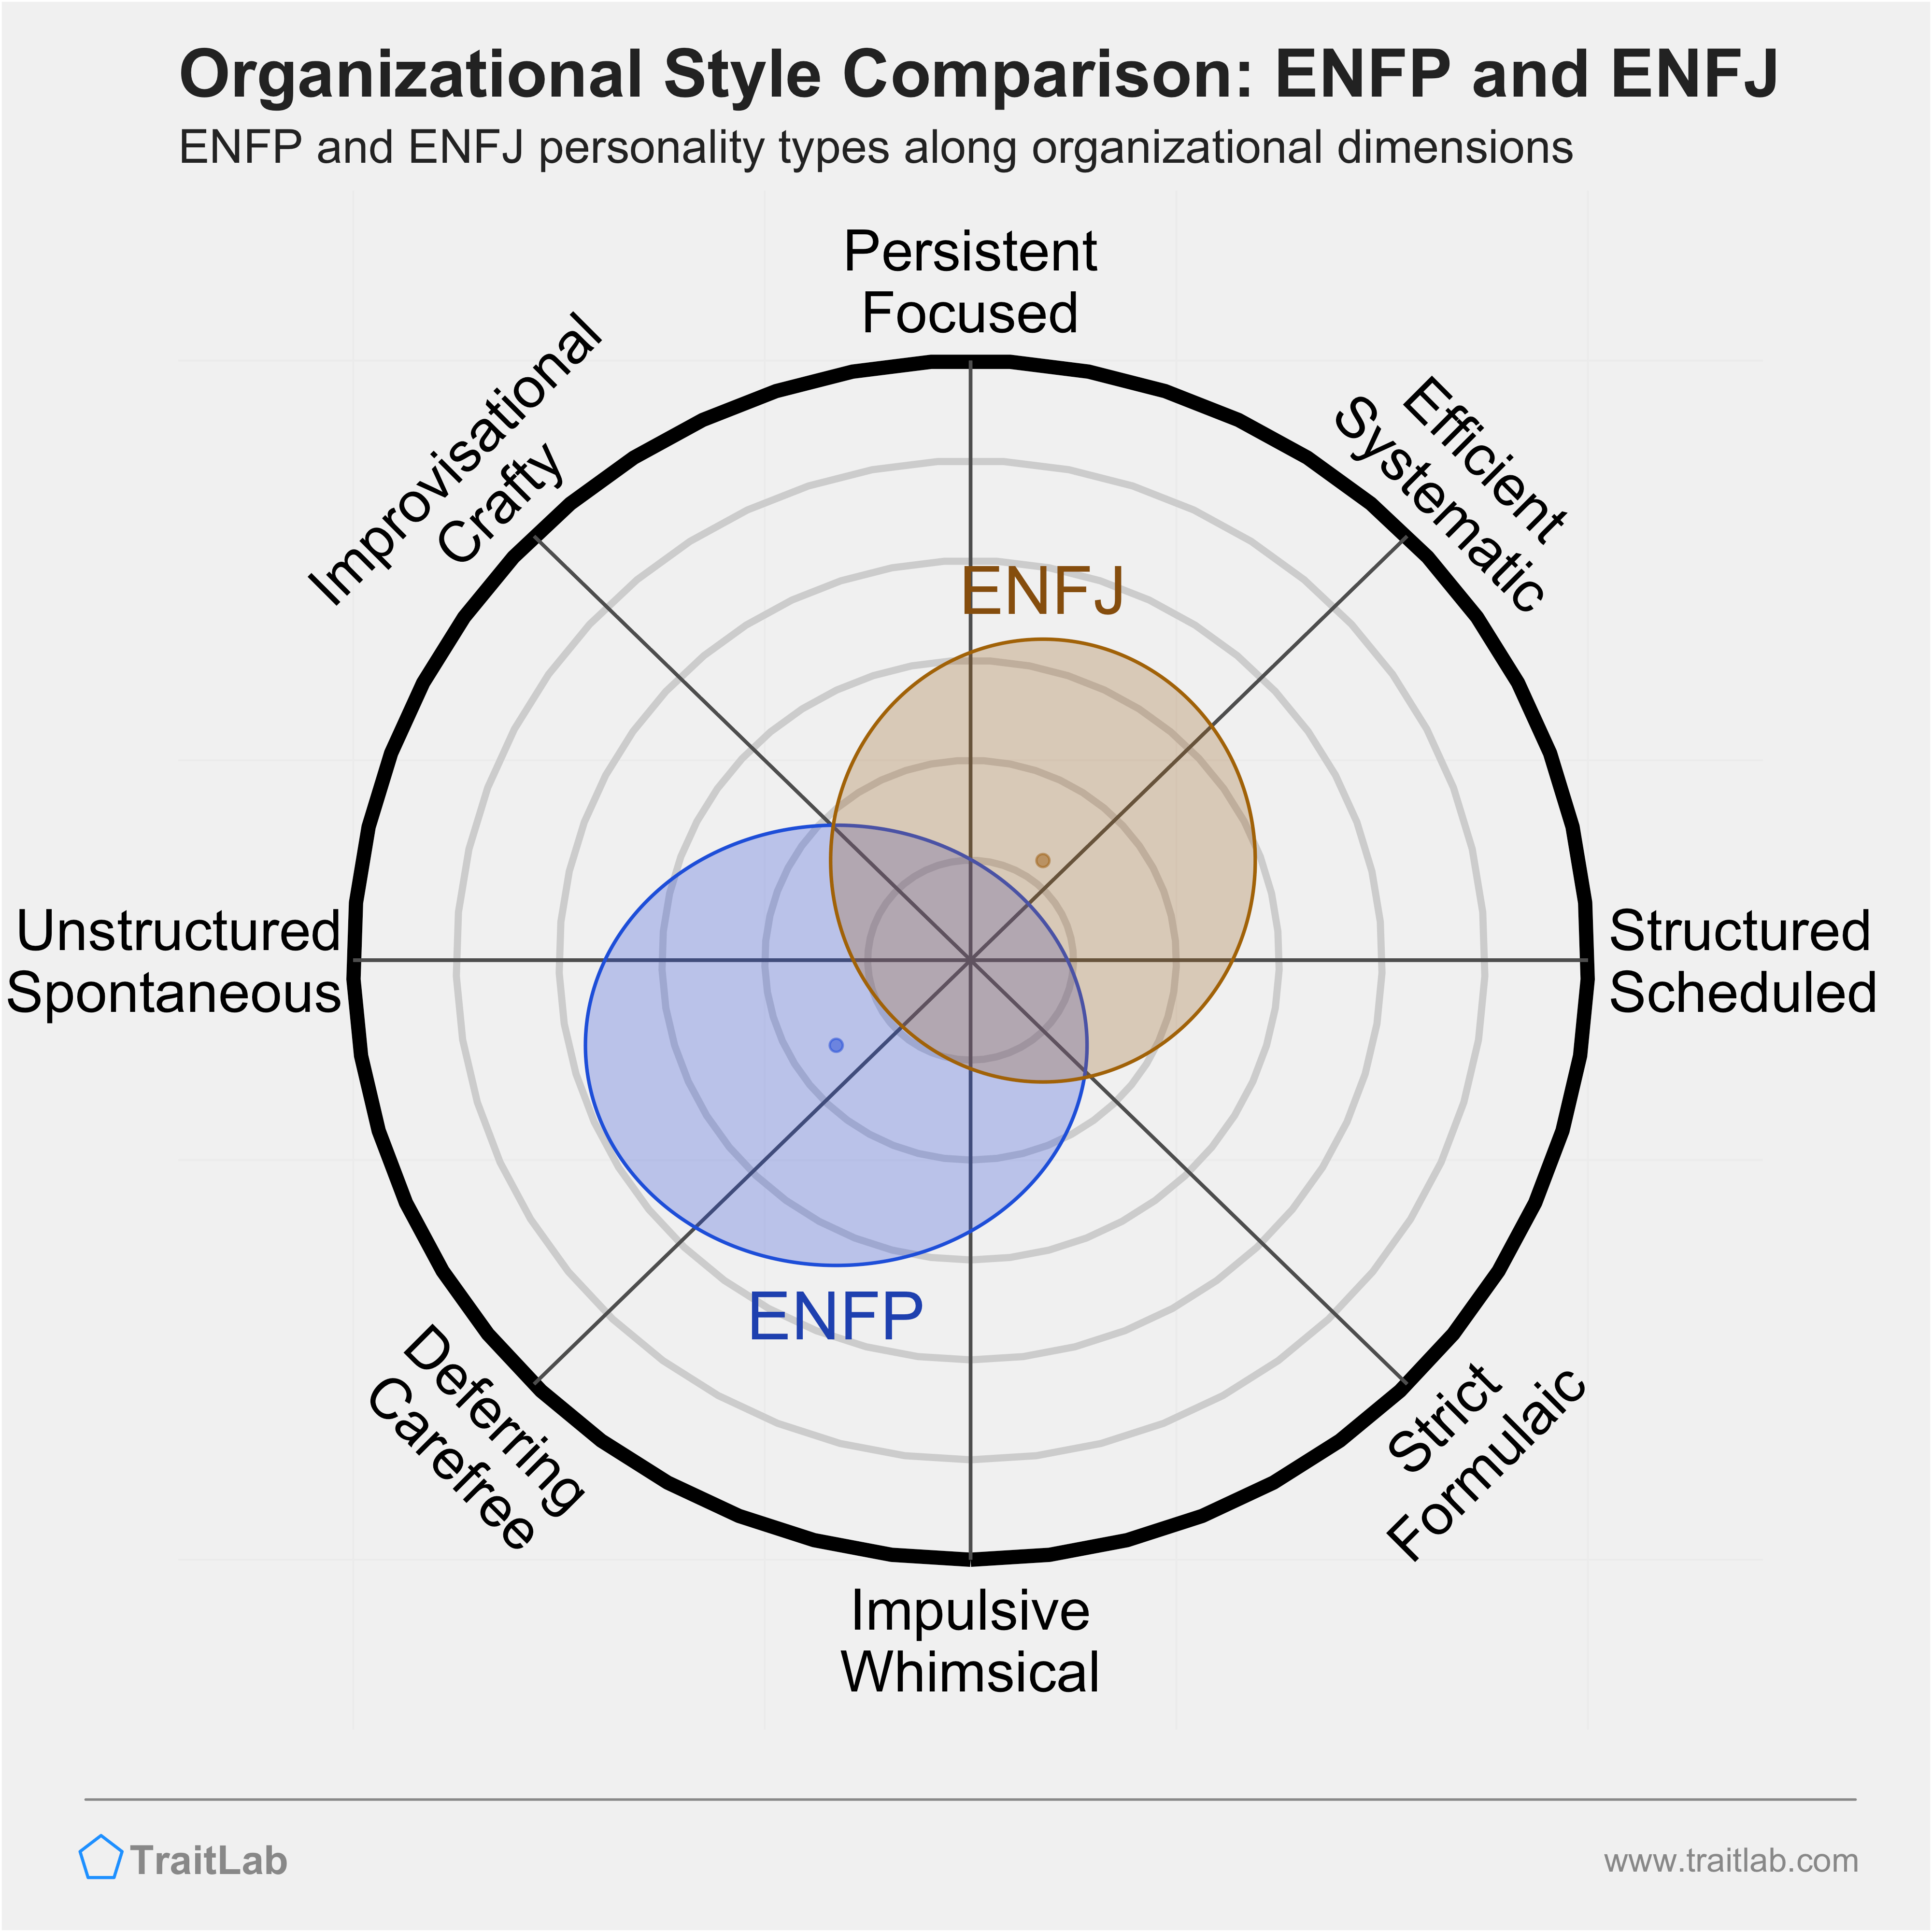 ENFP and ENFJ comparison across organizational dimensions